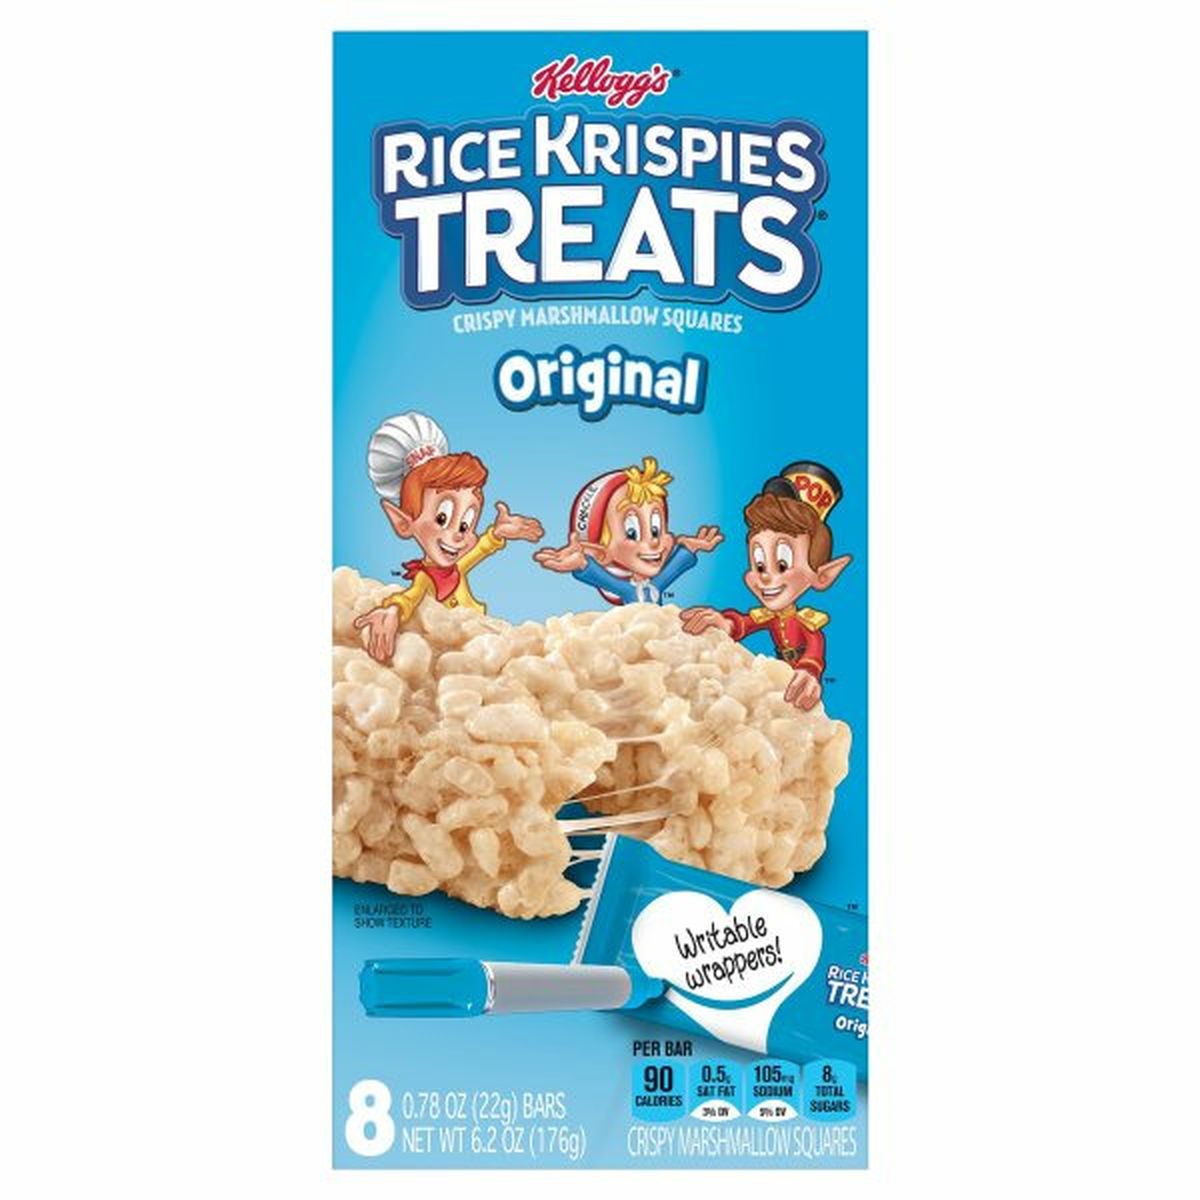 Calories in Kellogg's Rice Krispies Treats Treats Crispy Marshmallow Squares, Original